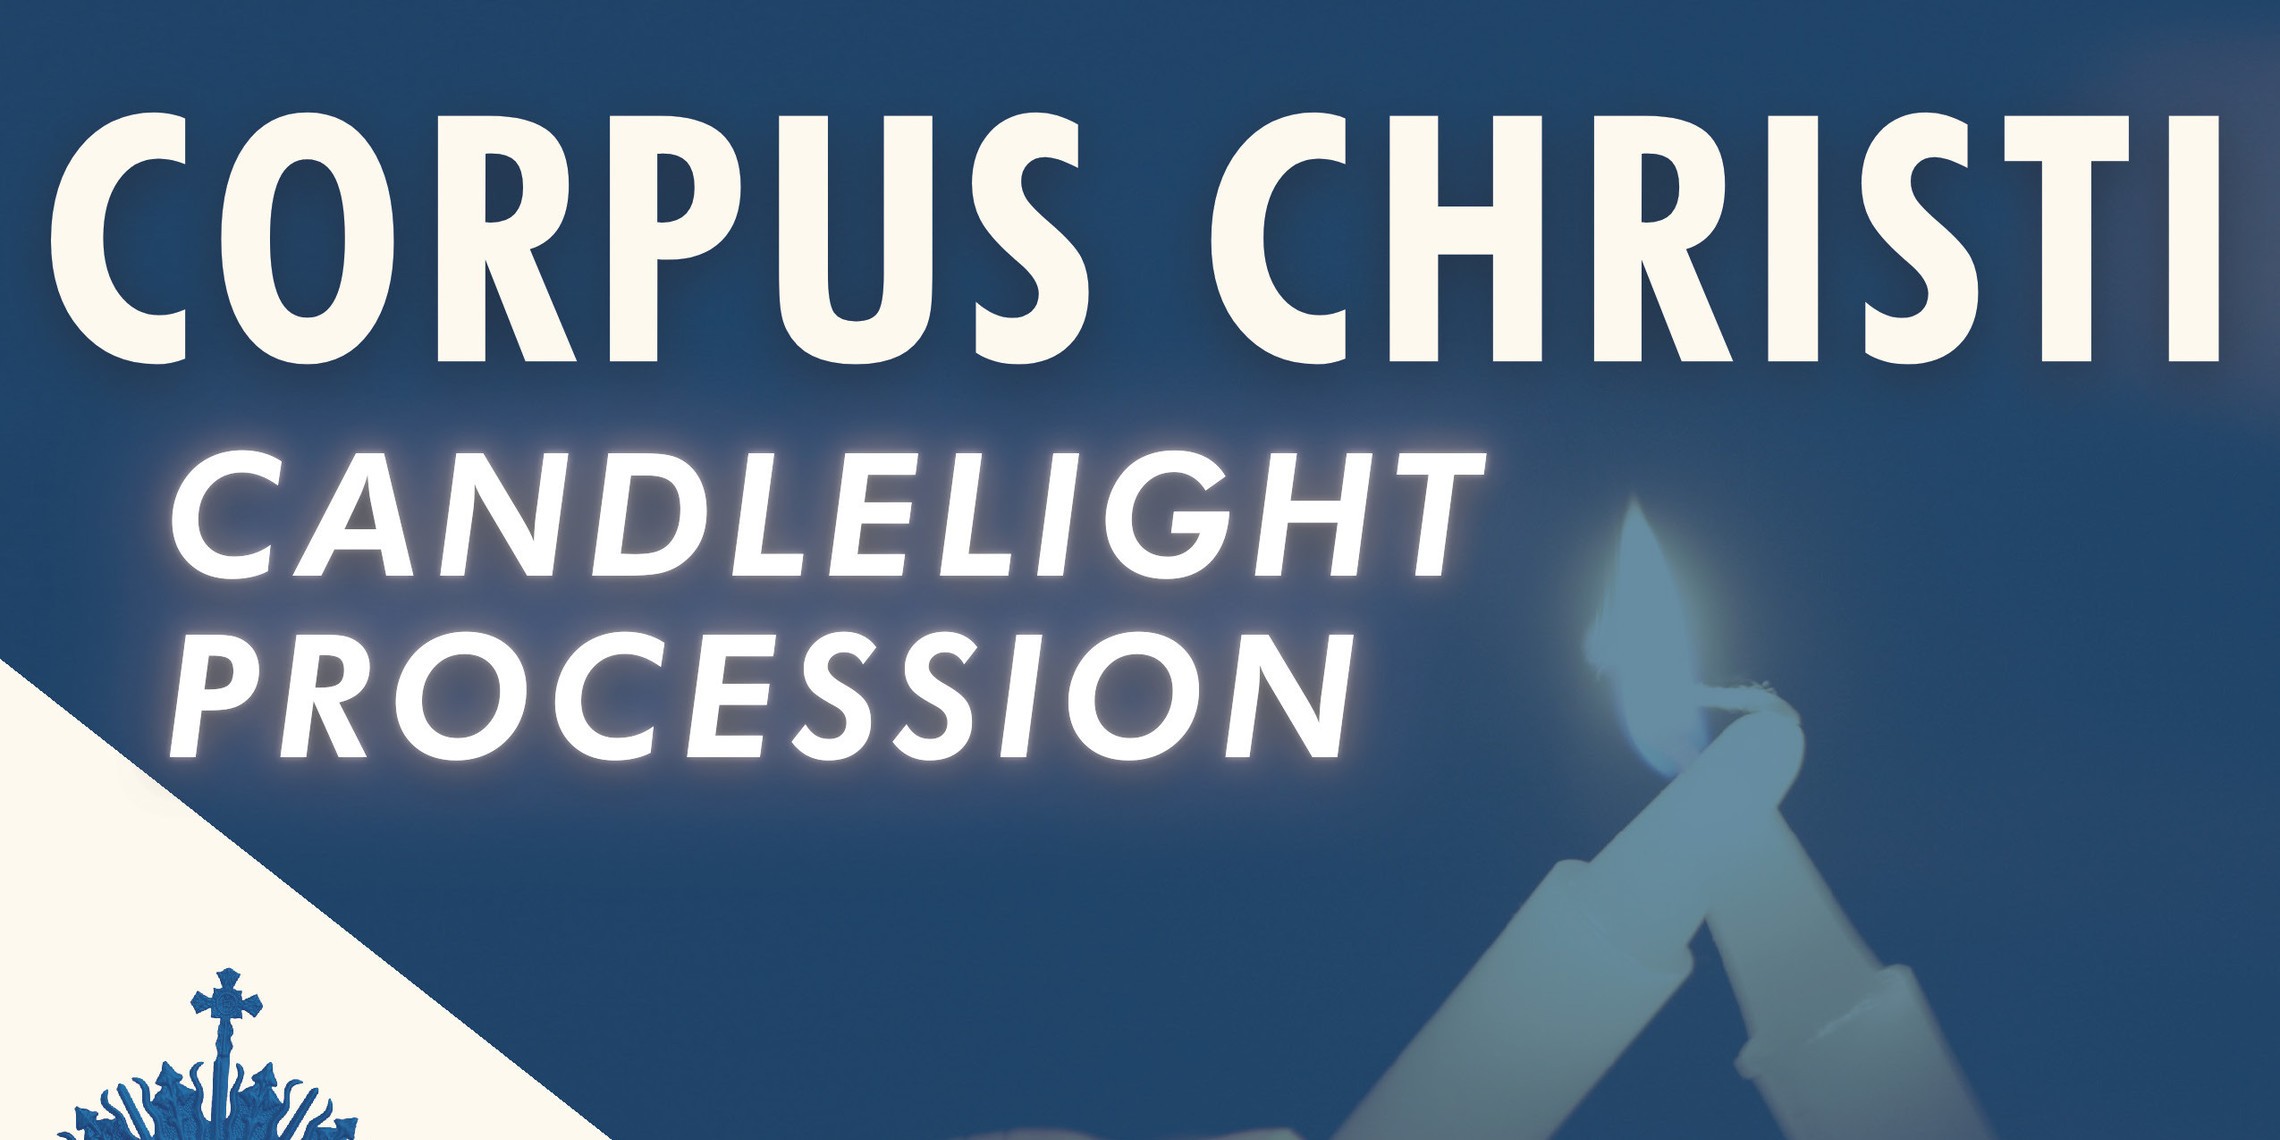 Corpus Christi Candlelight Procession   Er Flyer